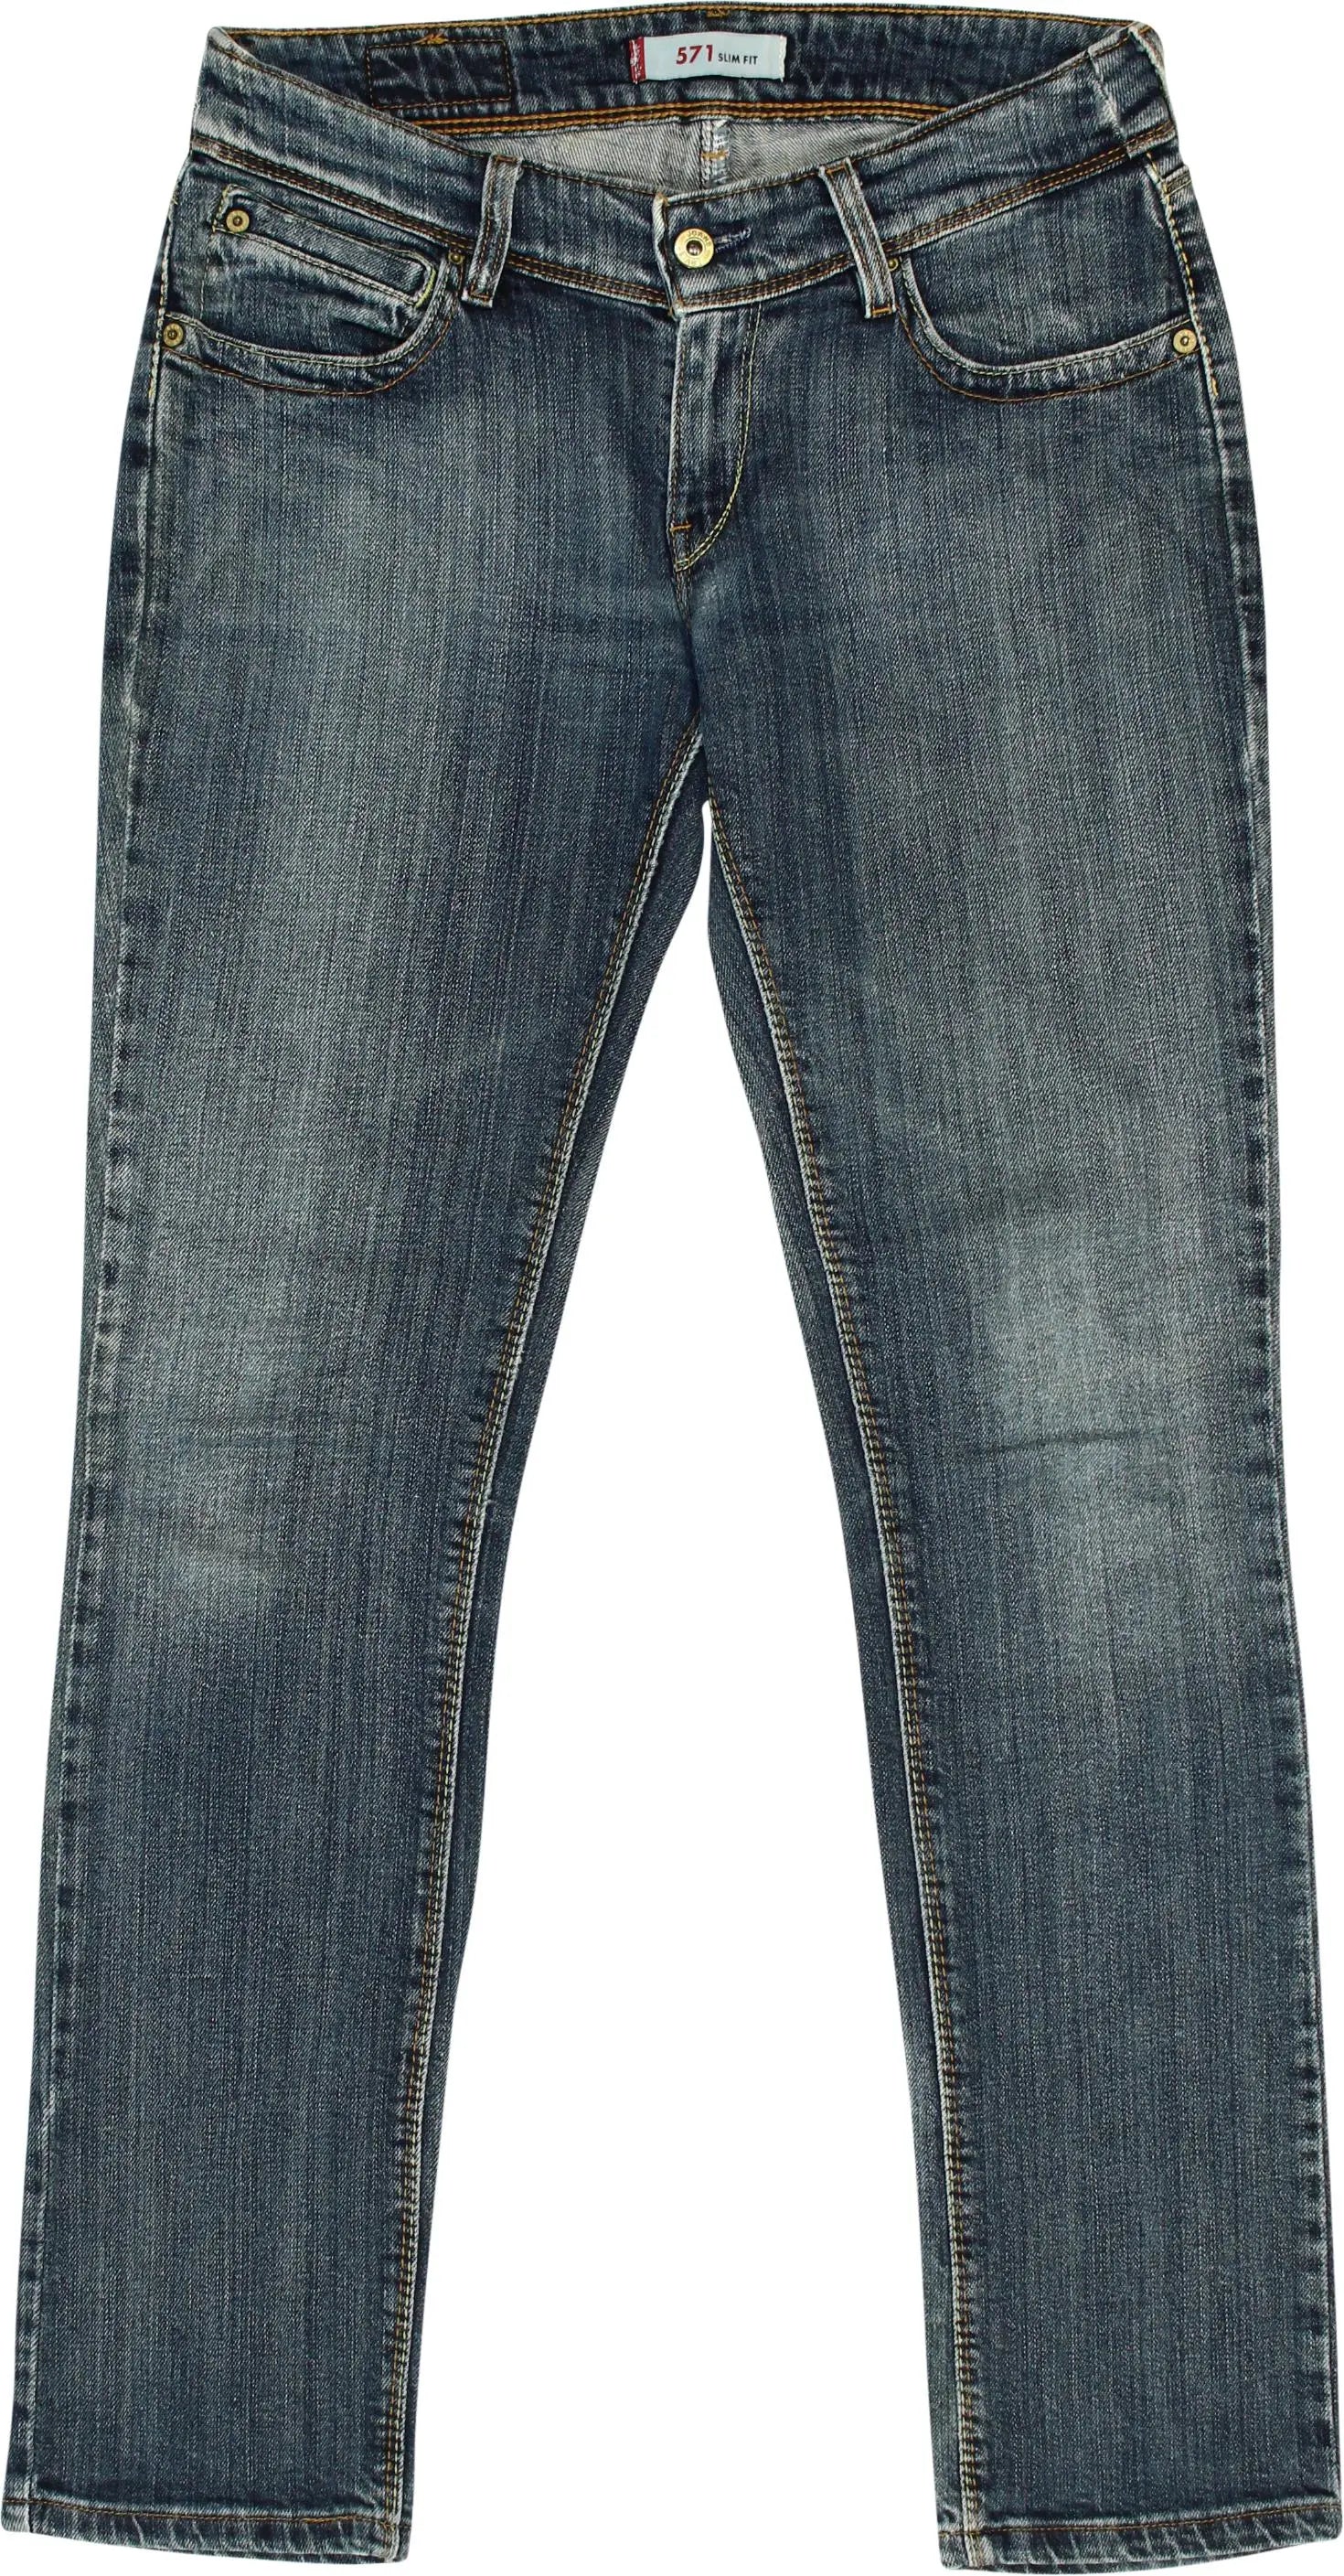 Levi's - Levi's 571 Low Waist Slim Fit Jeans- ThriftTale.com - Vintage and second handclothing